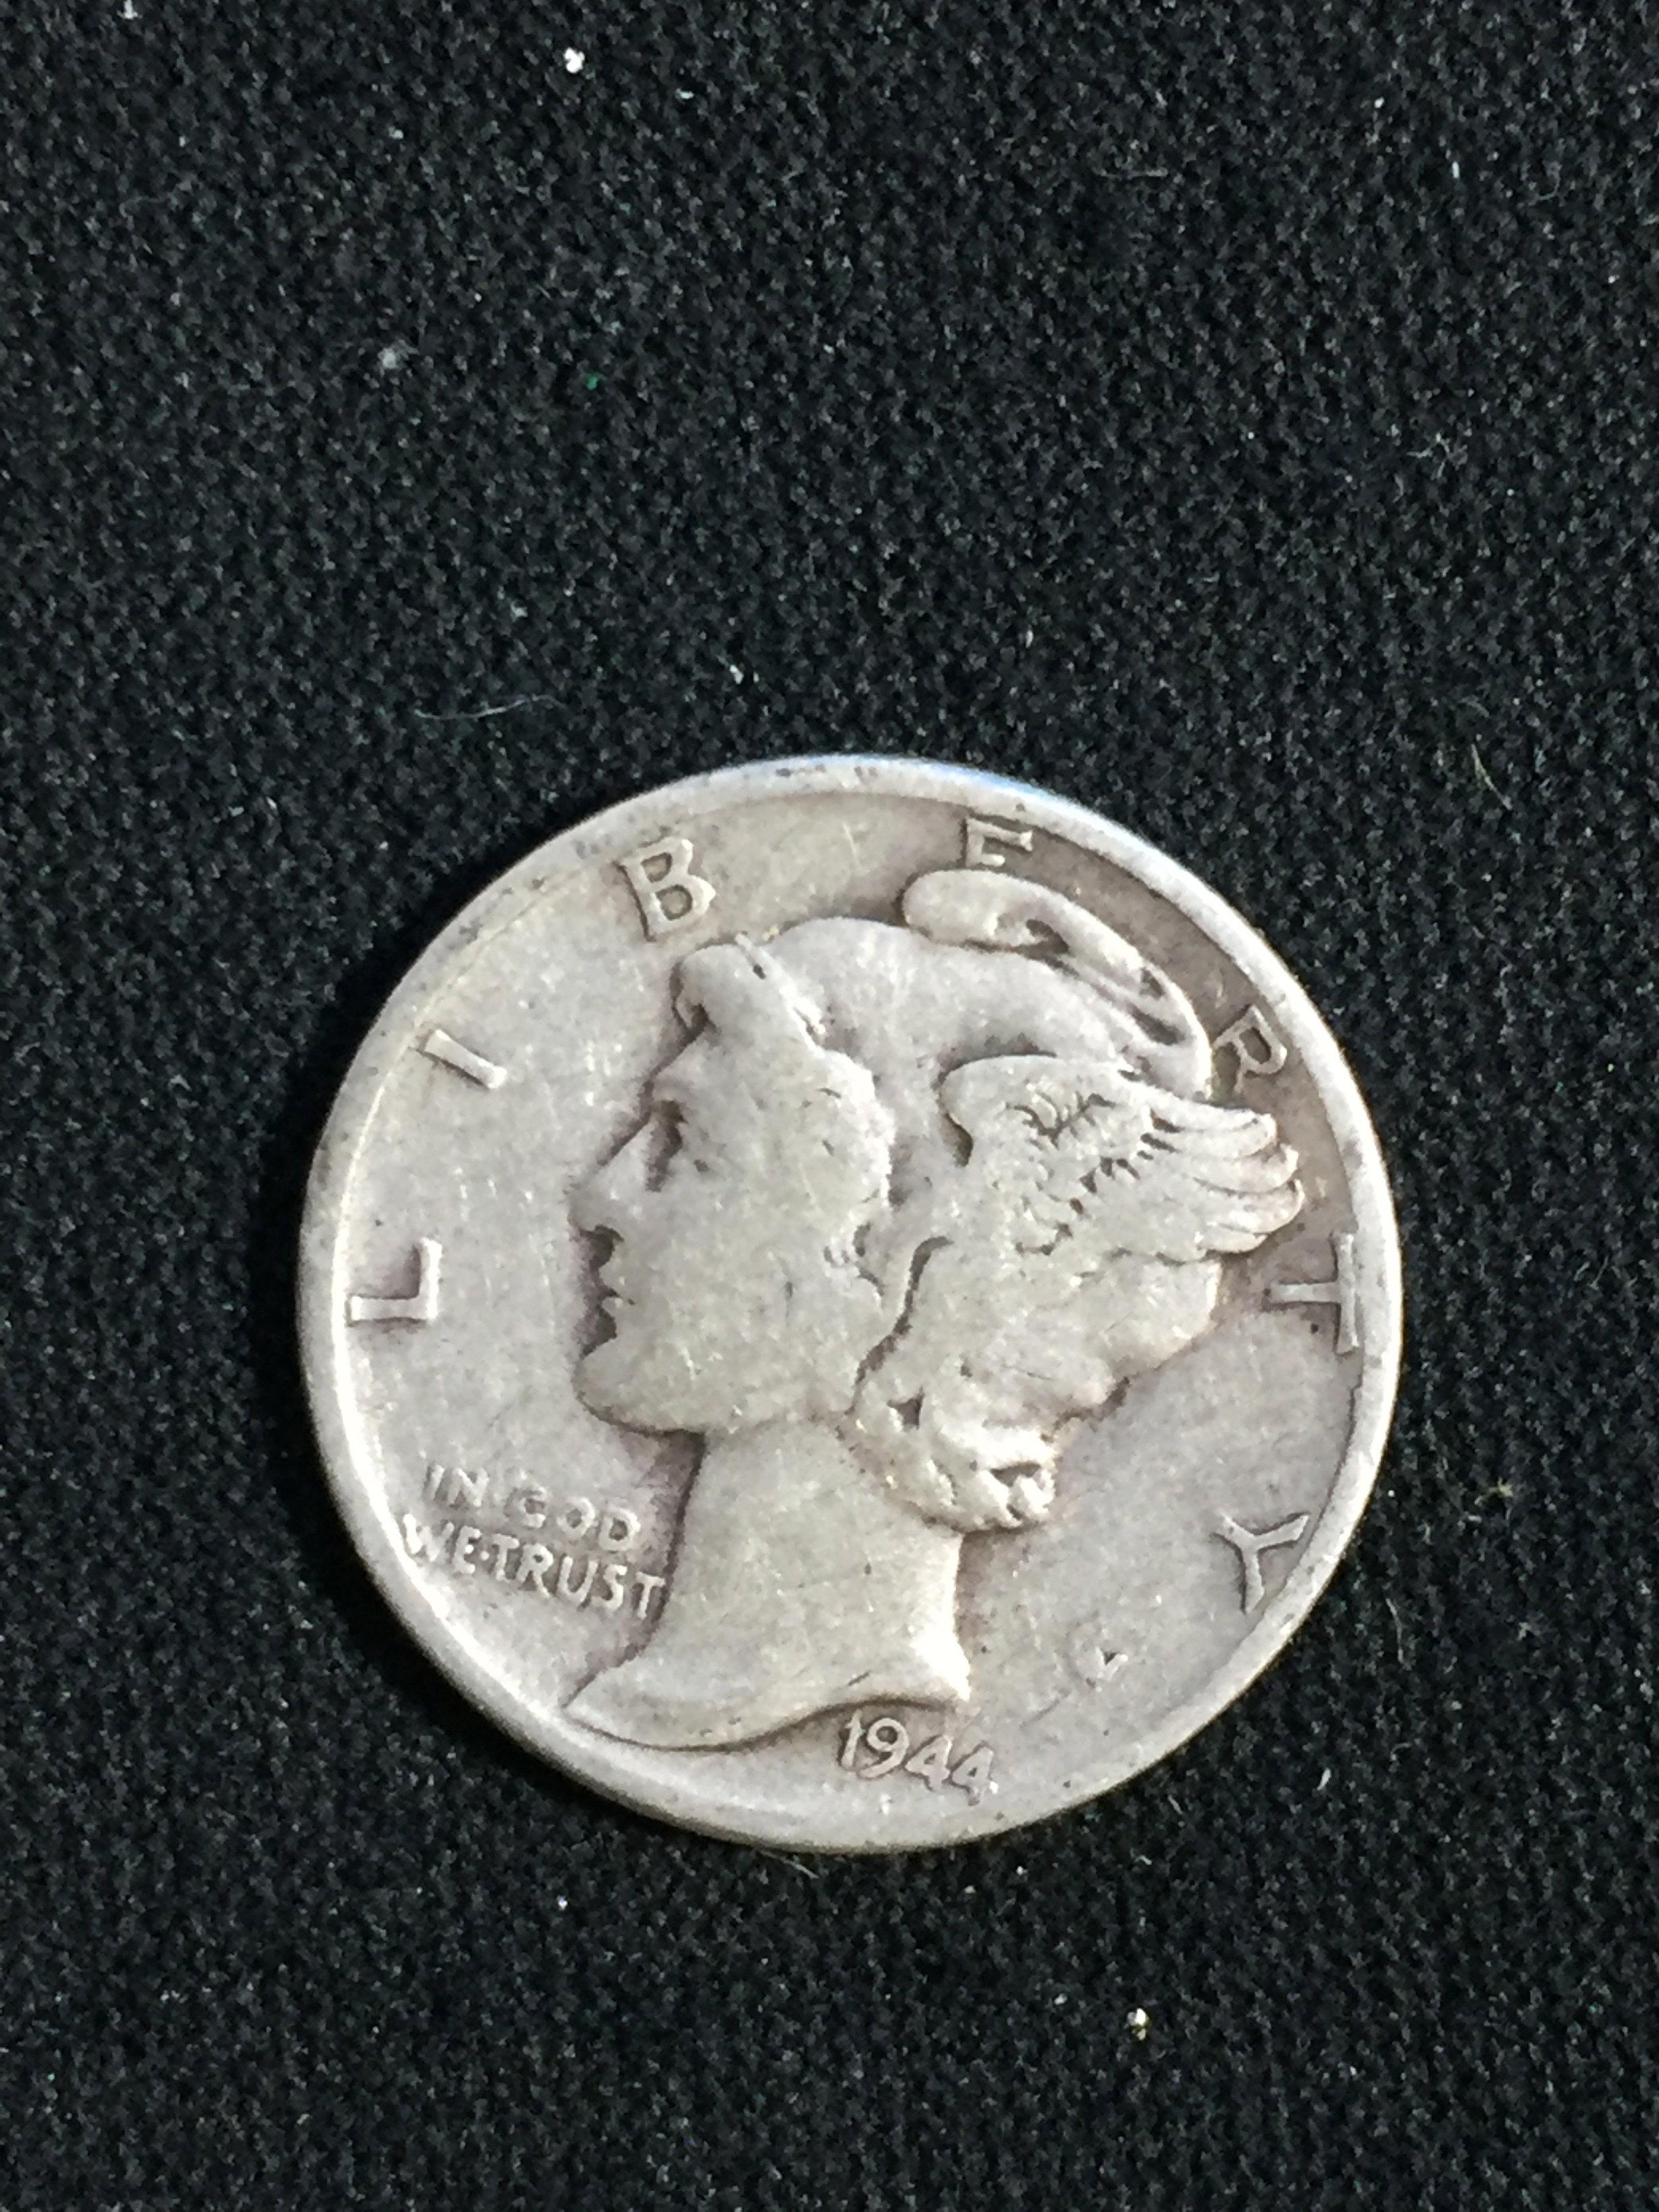 1944 United States Mercury Dime - 90% Silver Coin